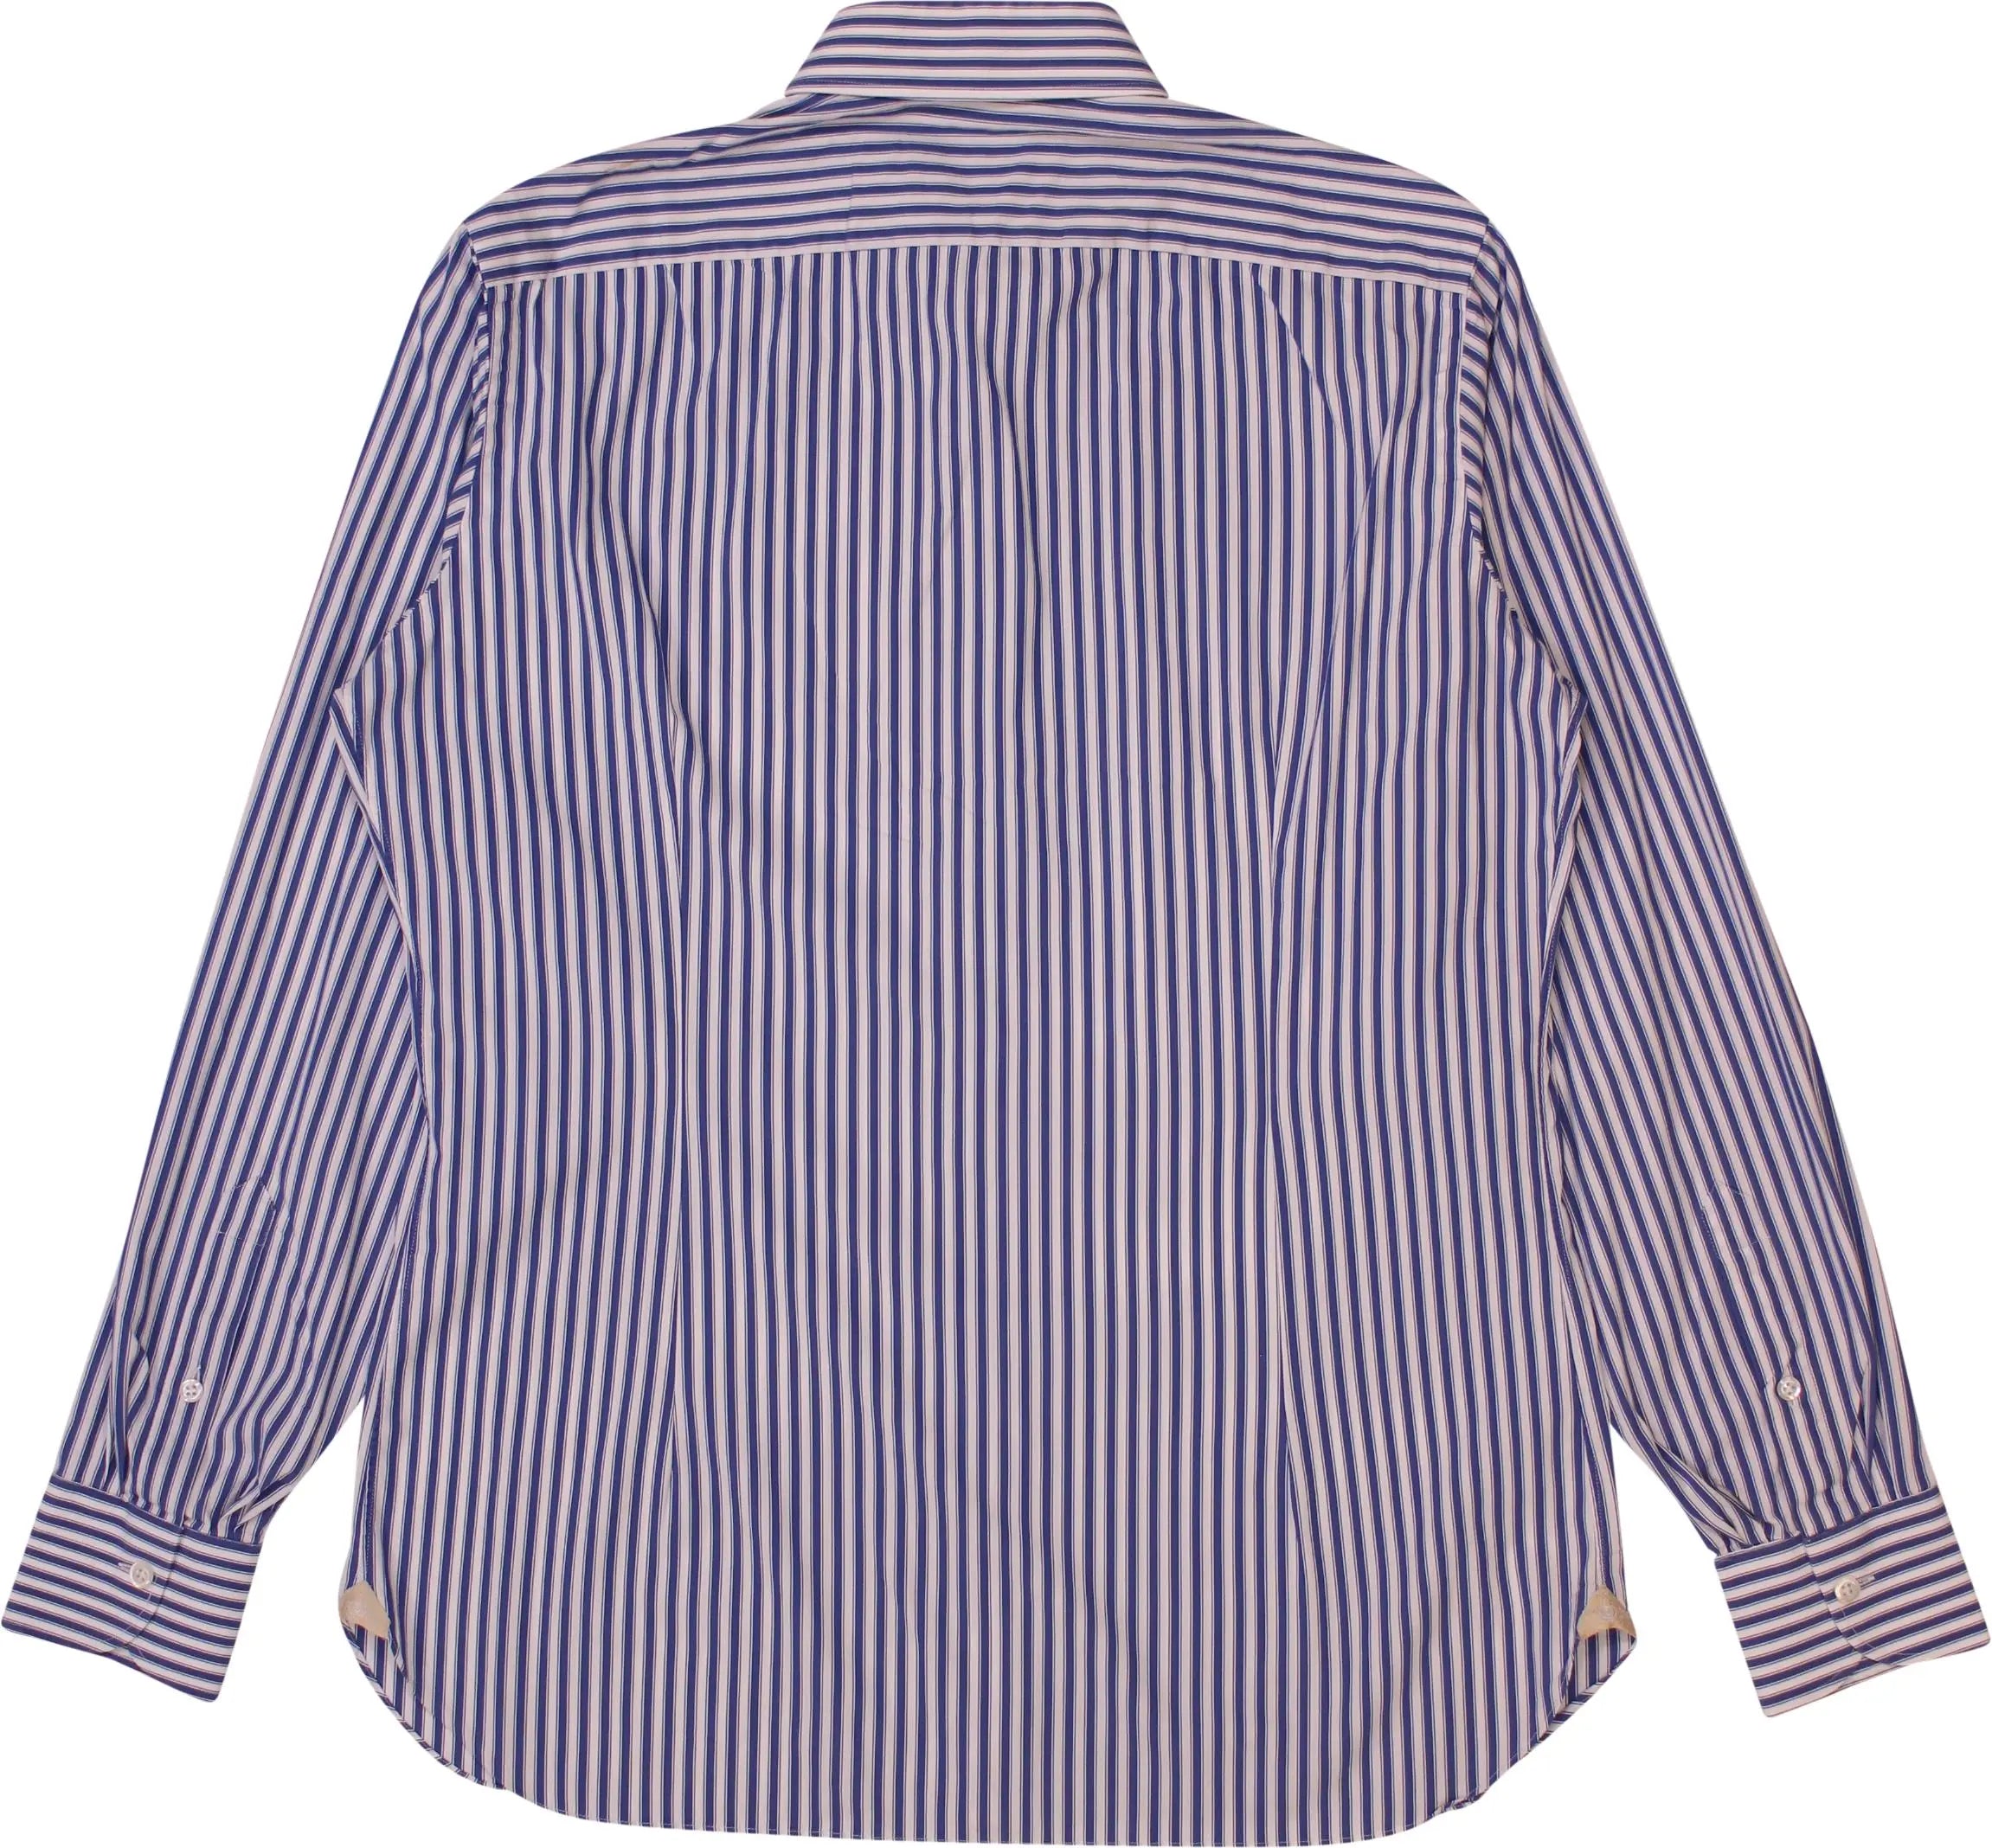 Luigi Borreli - Blue Striped Shirt- ThriftTale.com - Vintage and second handclothing